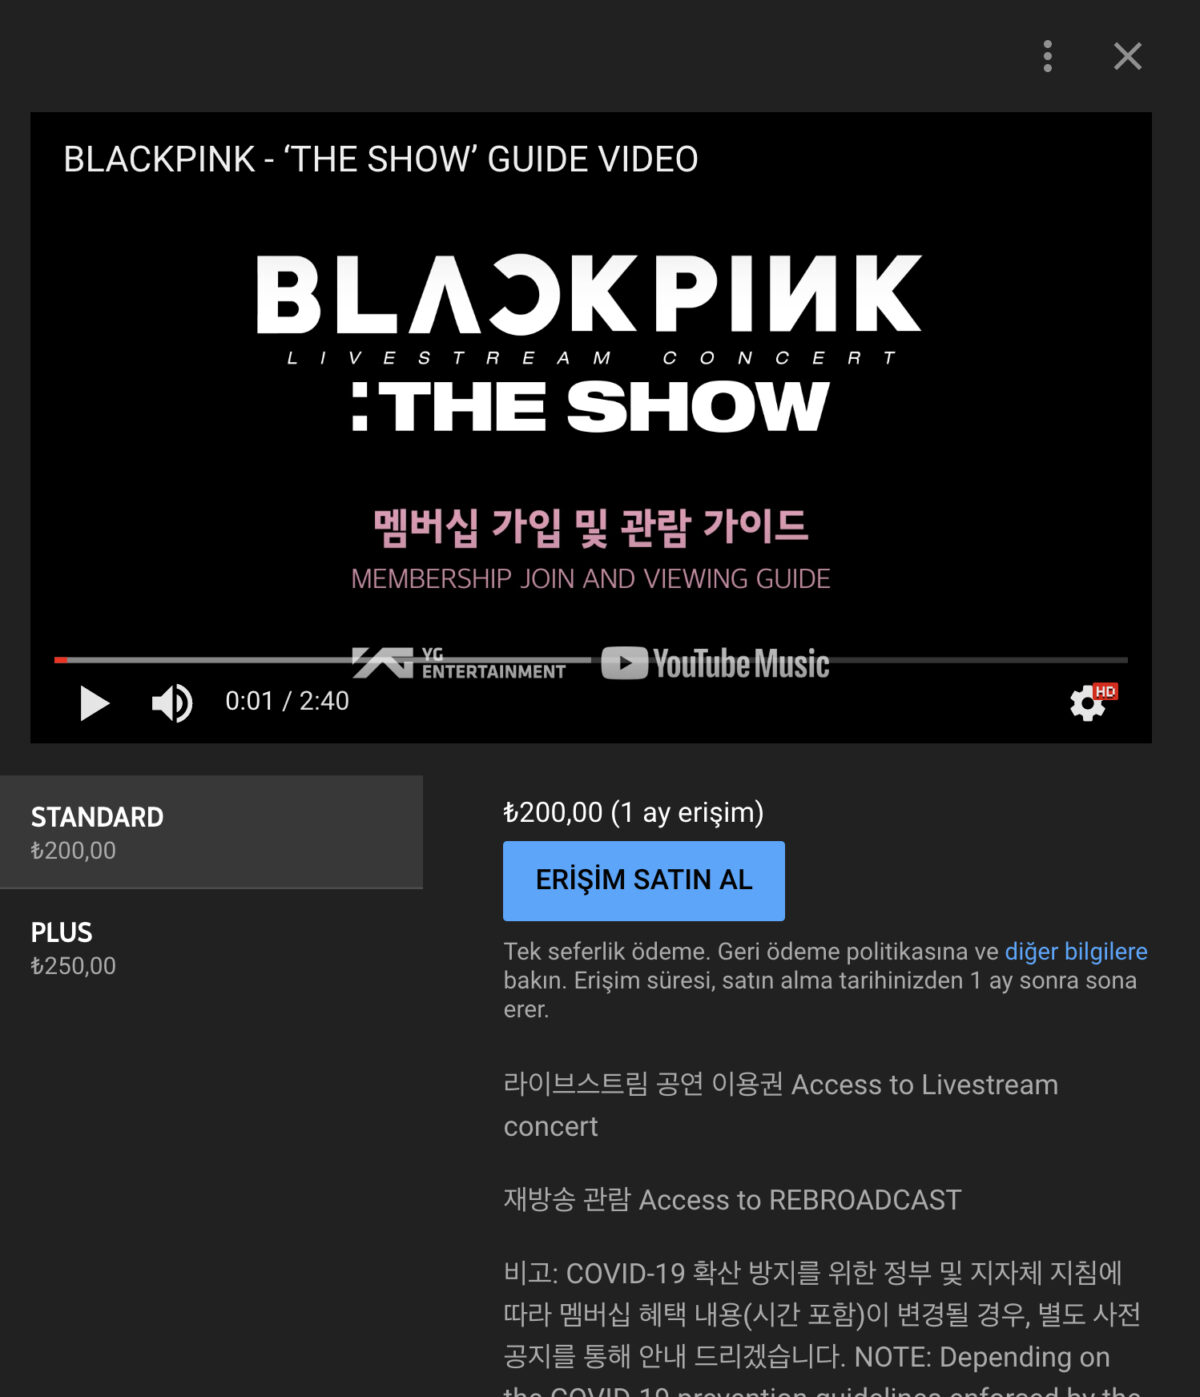 blackpink the show online konser tarih bilet fiyatlari bilet nasil alinir gosterimi korebu com